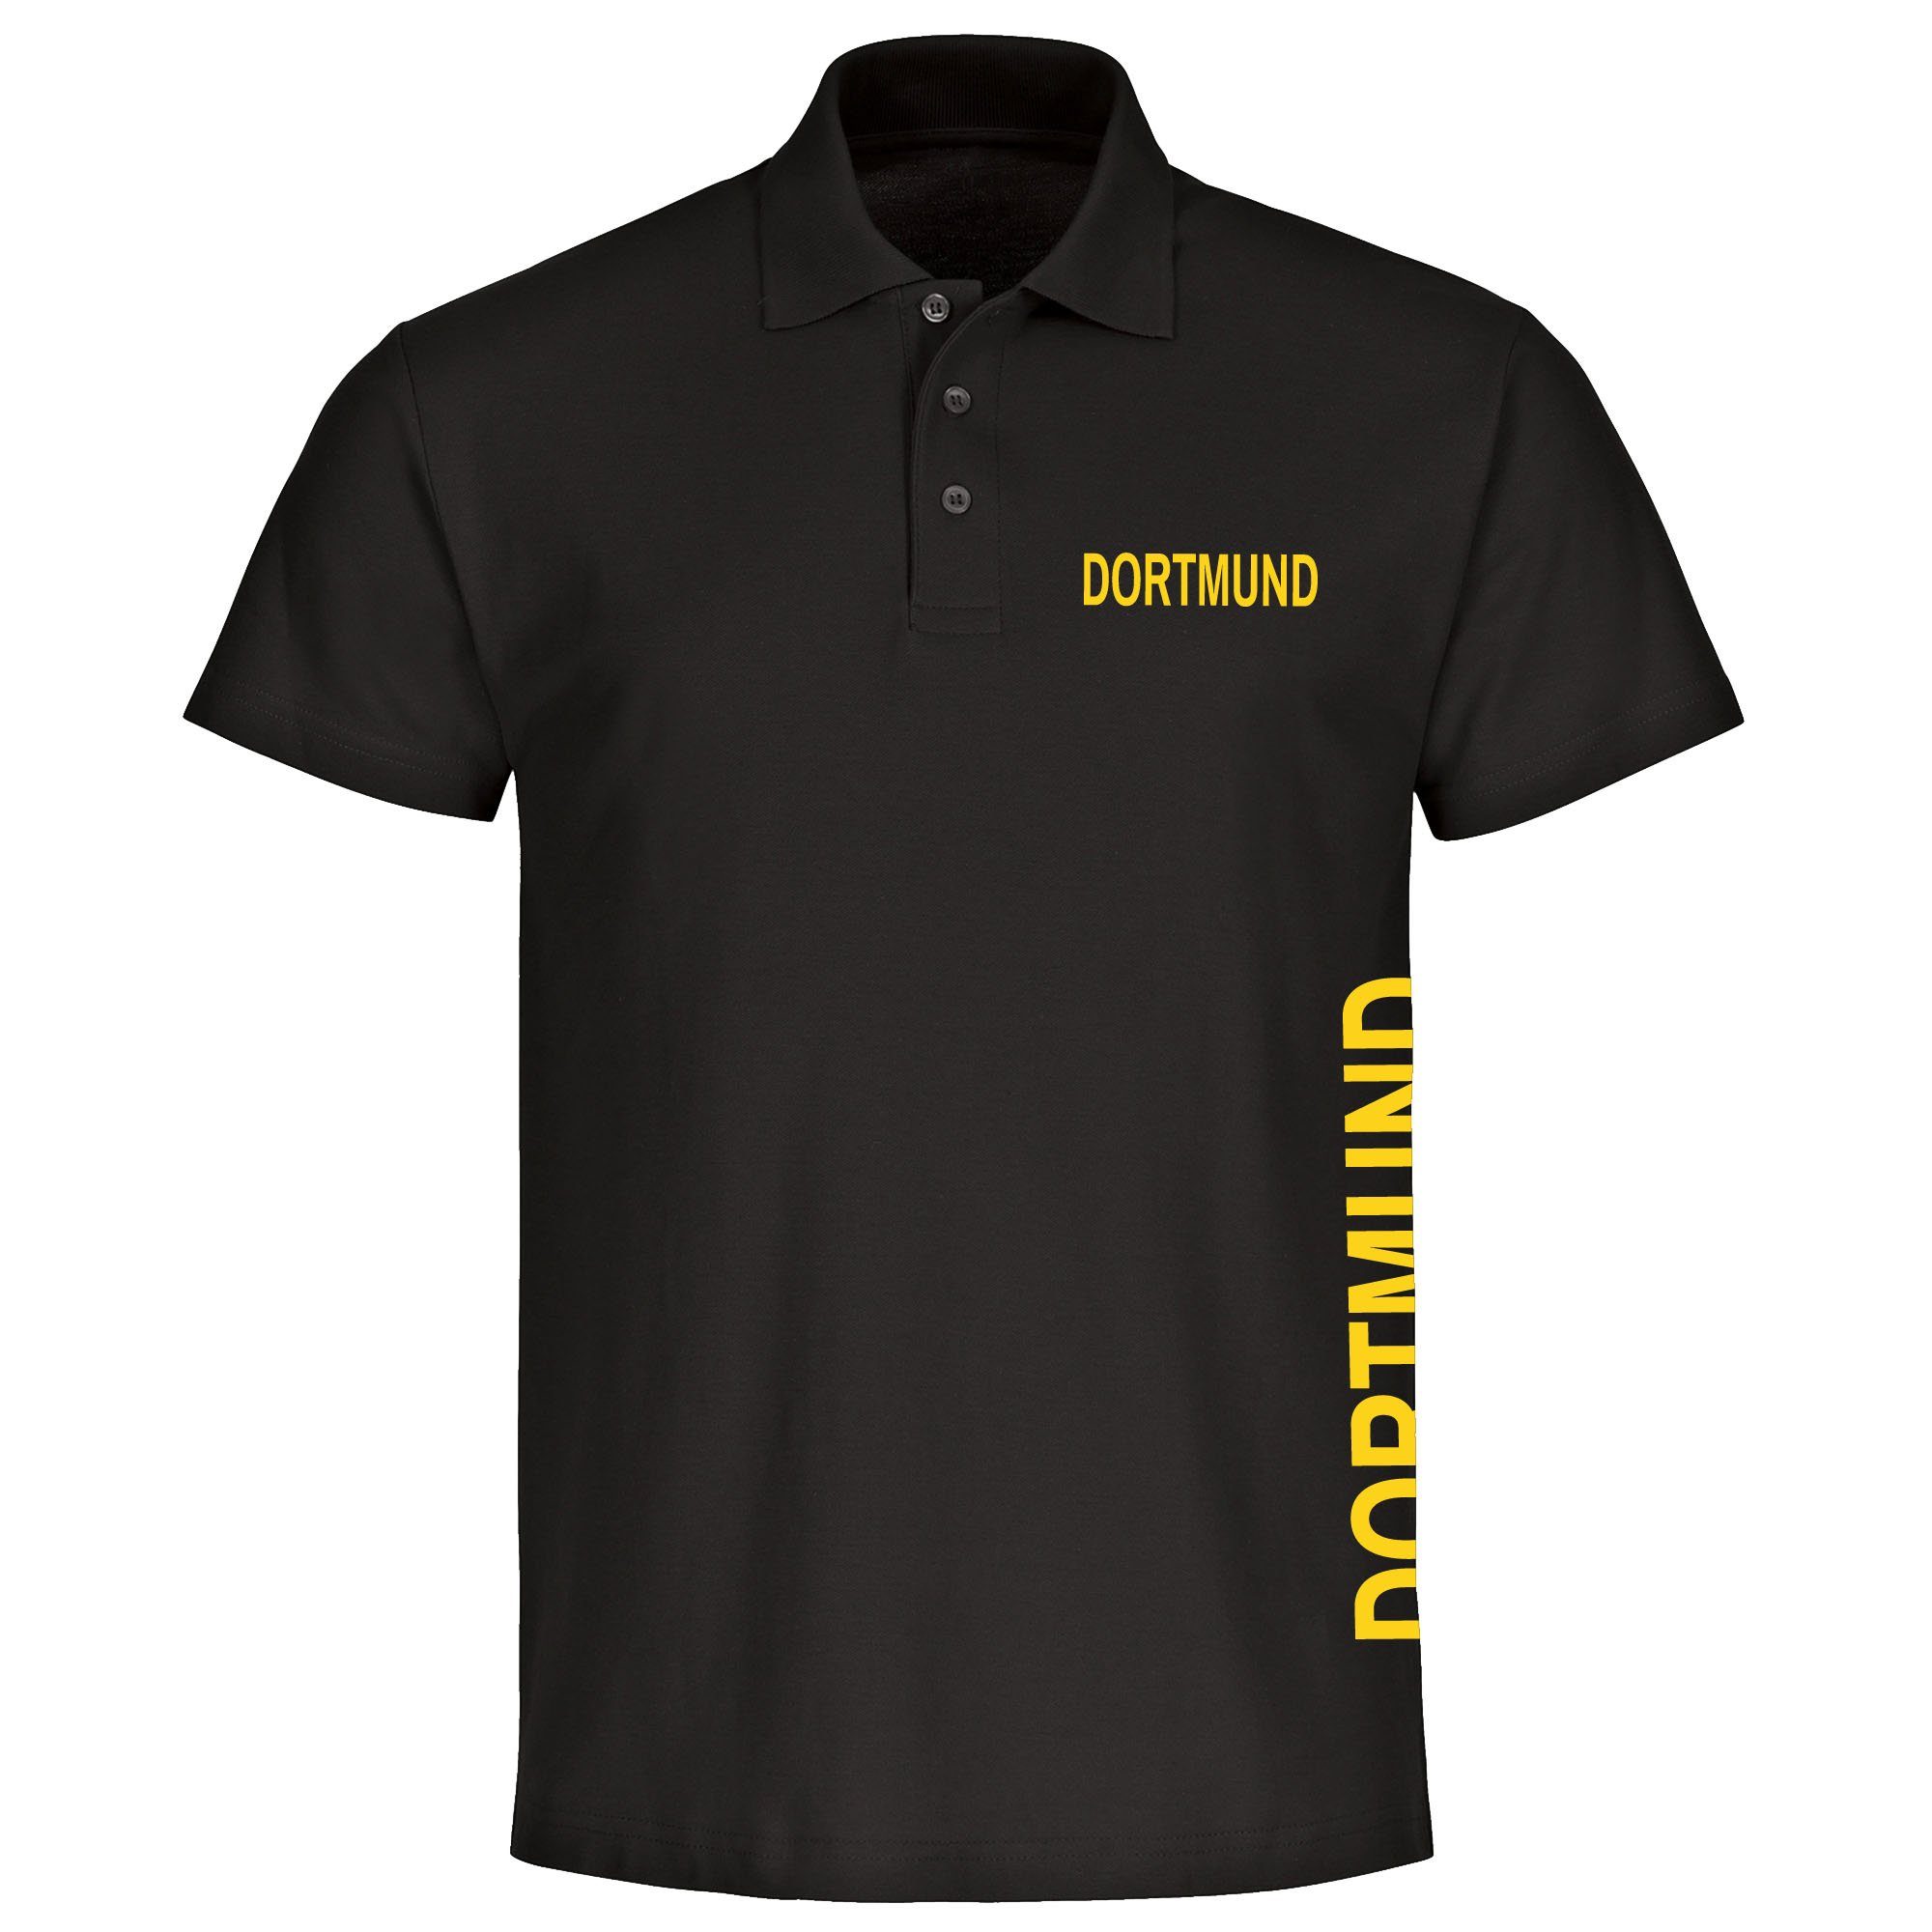 multifanshop Poloshirt Dortmund - Brust & Seite - Polo